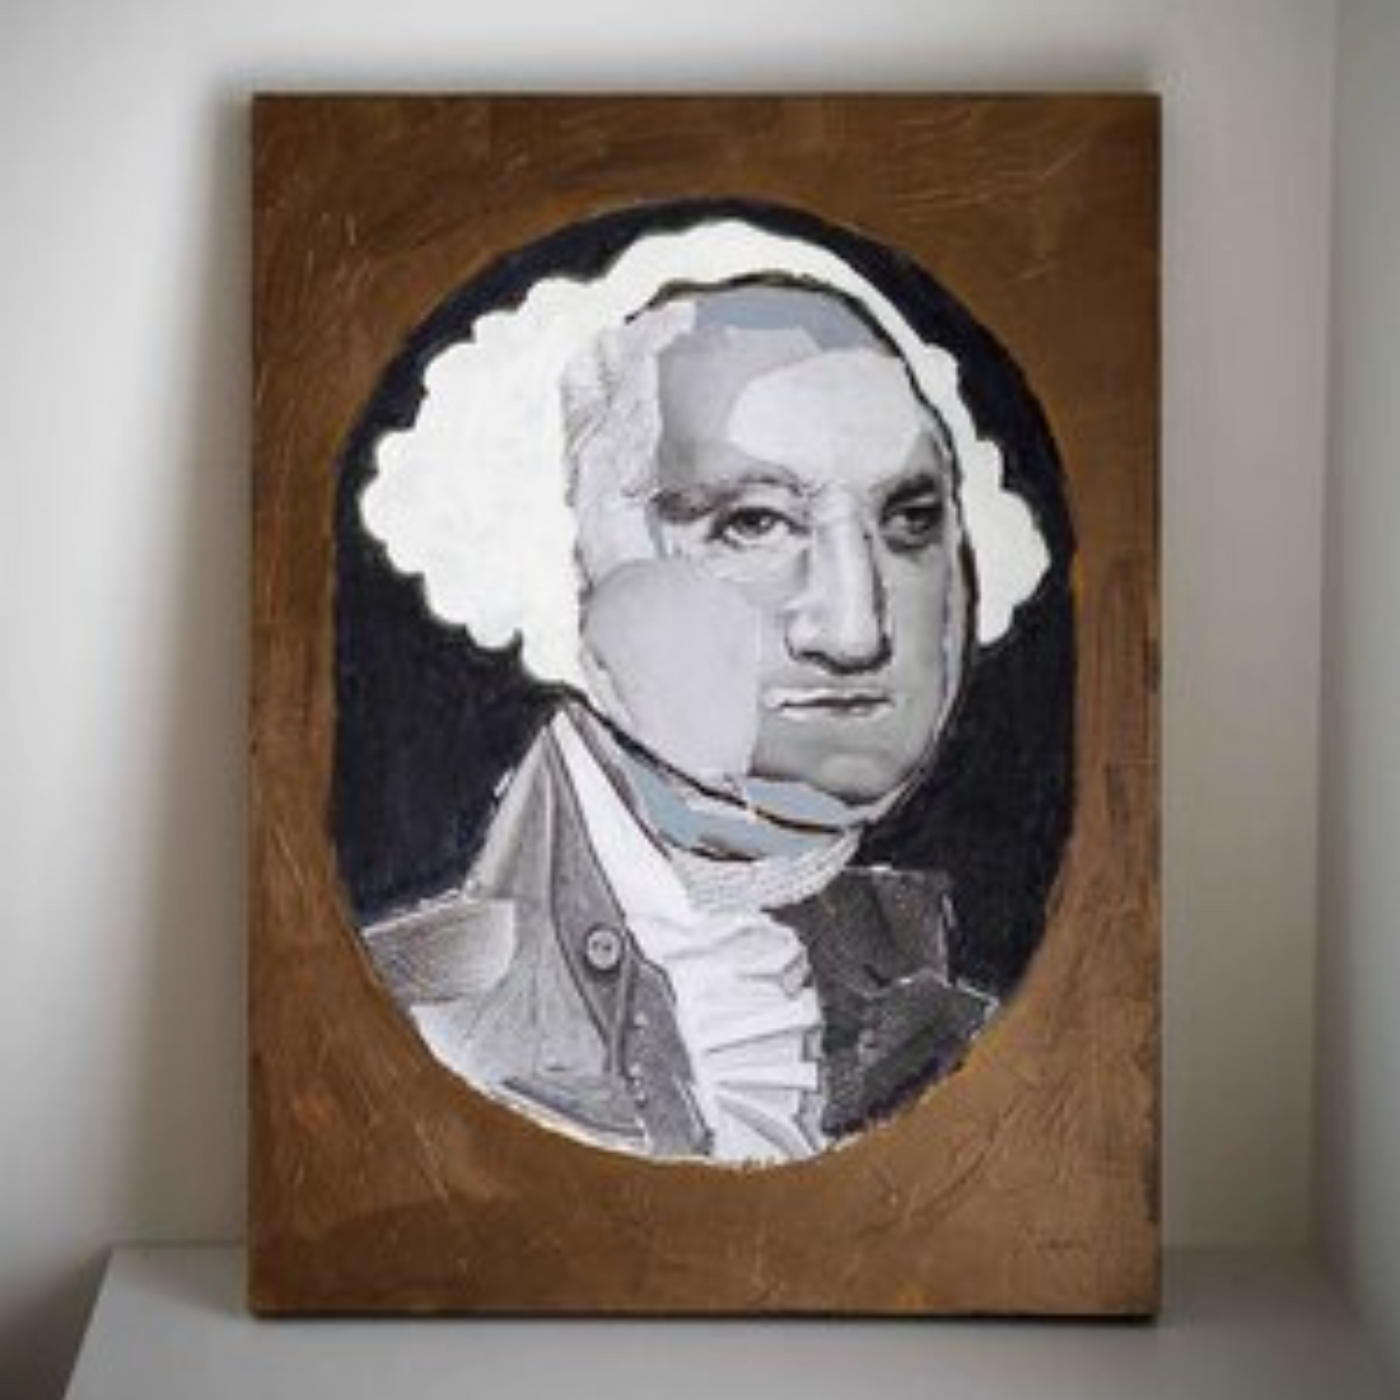 Collage And Illustration Of George Washington